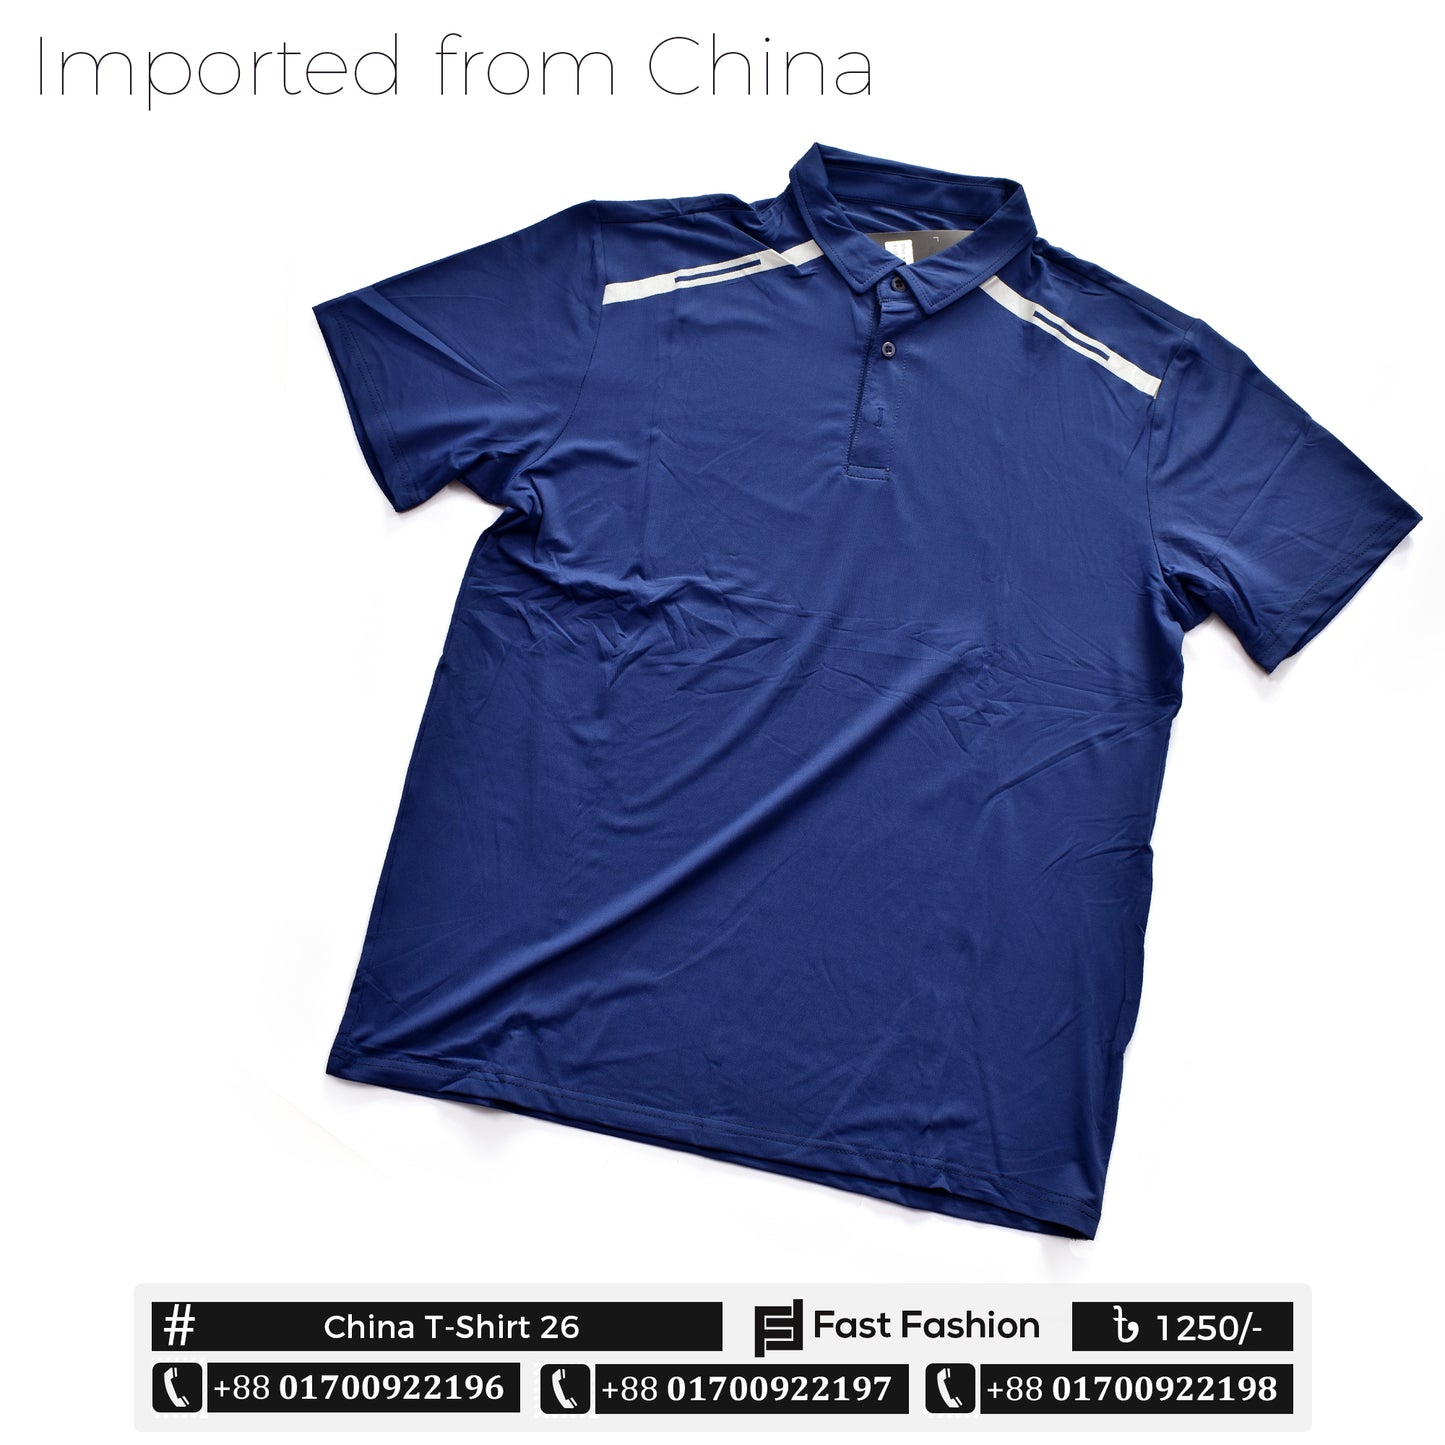 China T-Shirt 26